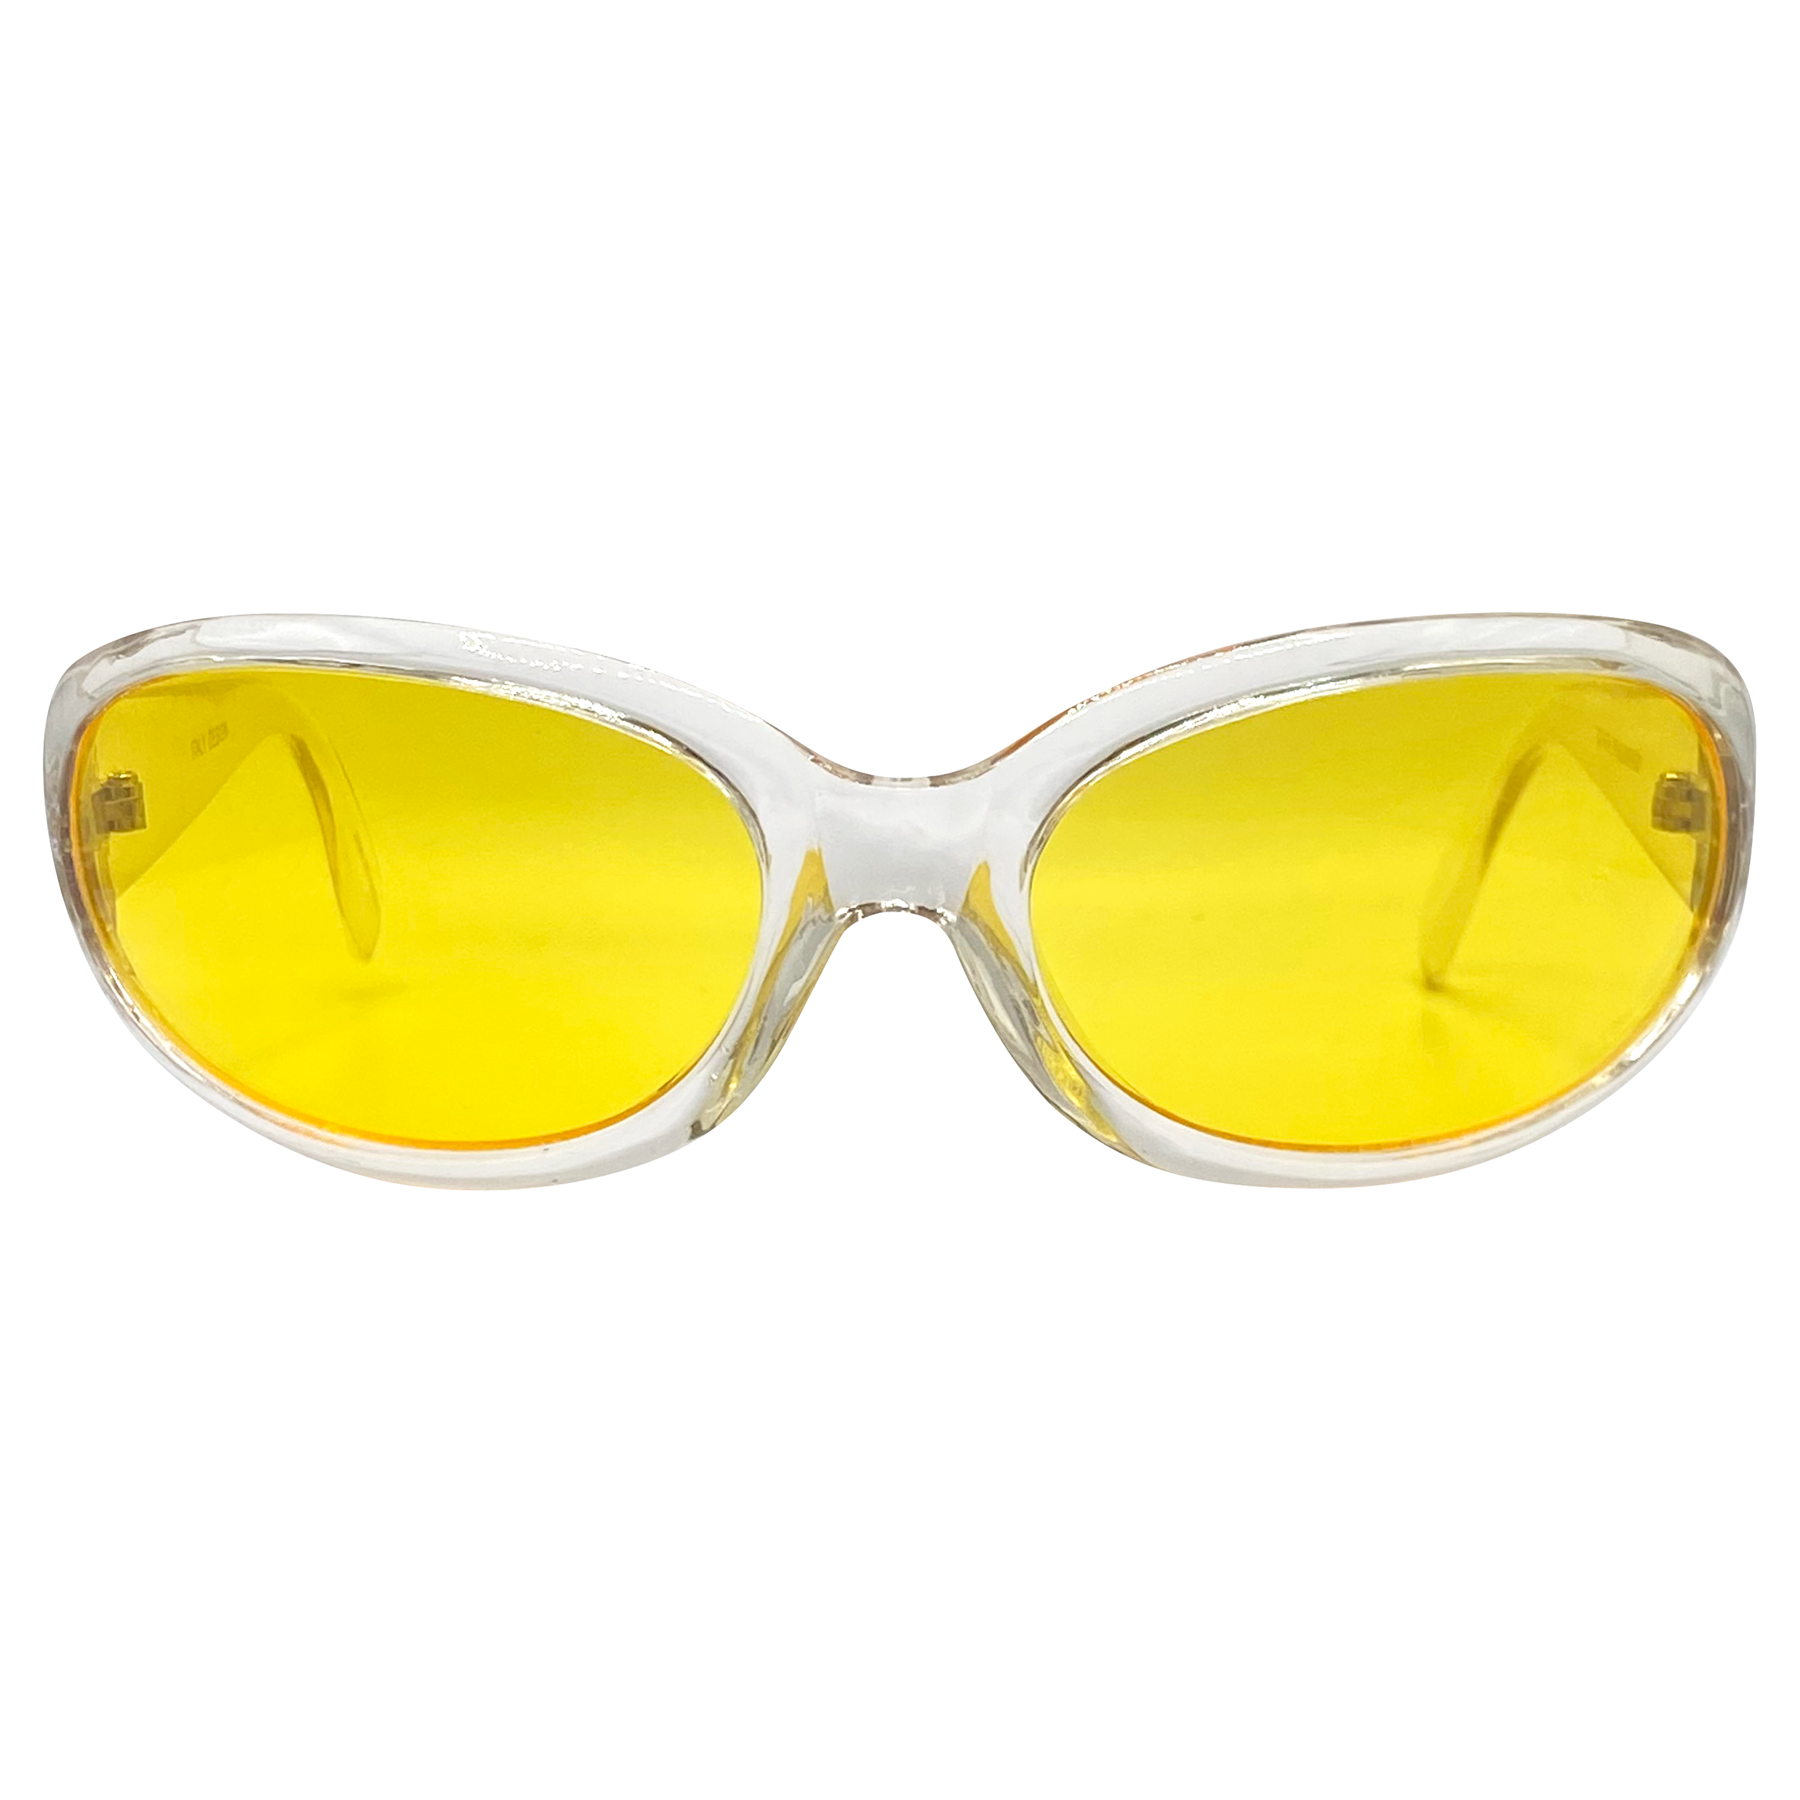 YOLKED Round Sports Sunglasses | Blue-Blocker | Night Driving